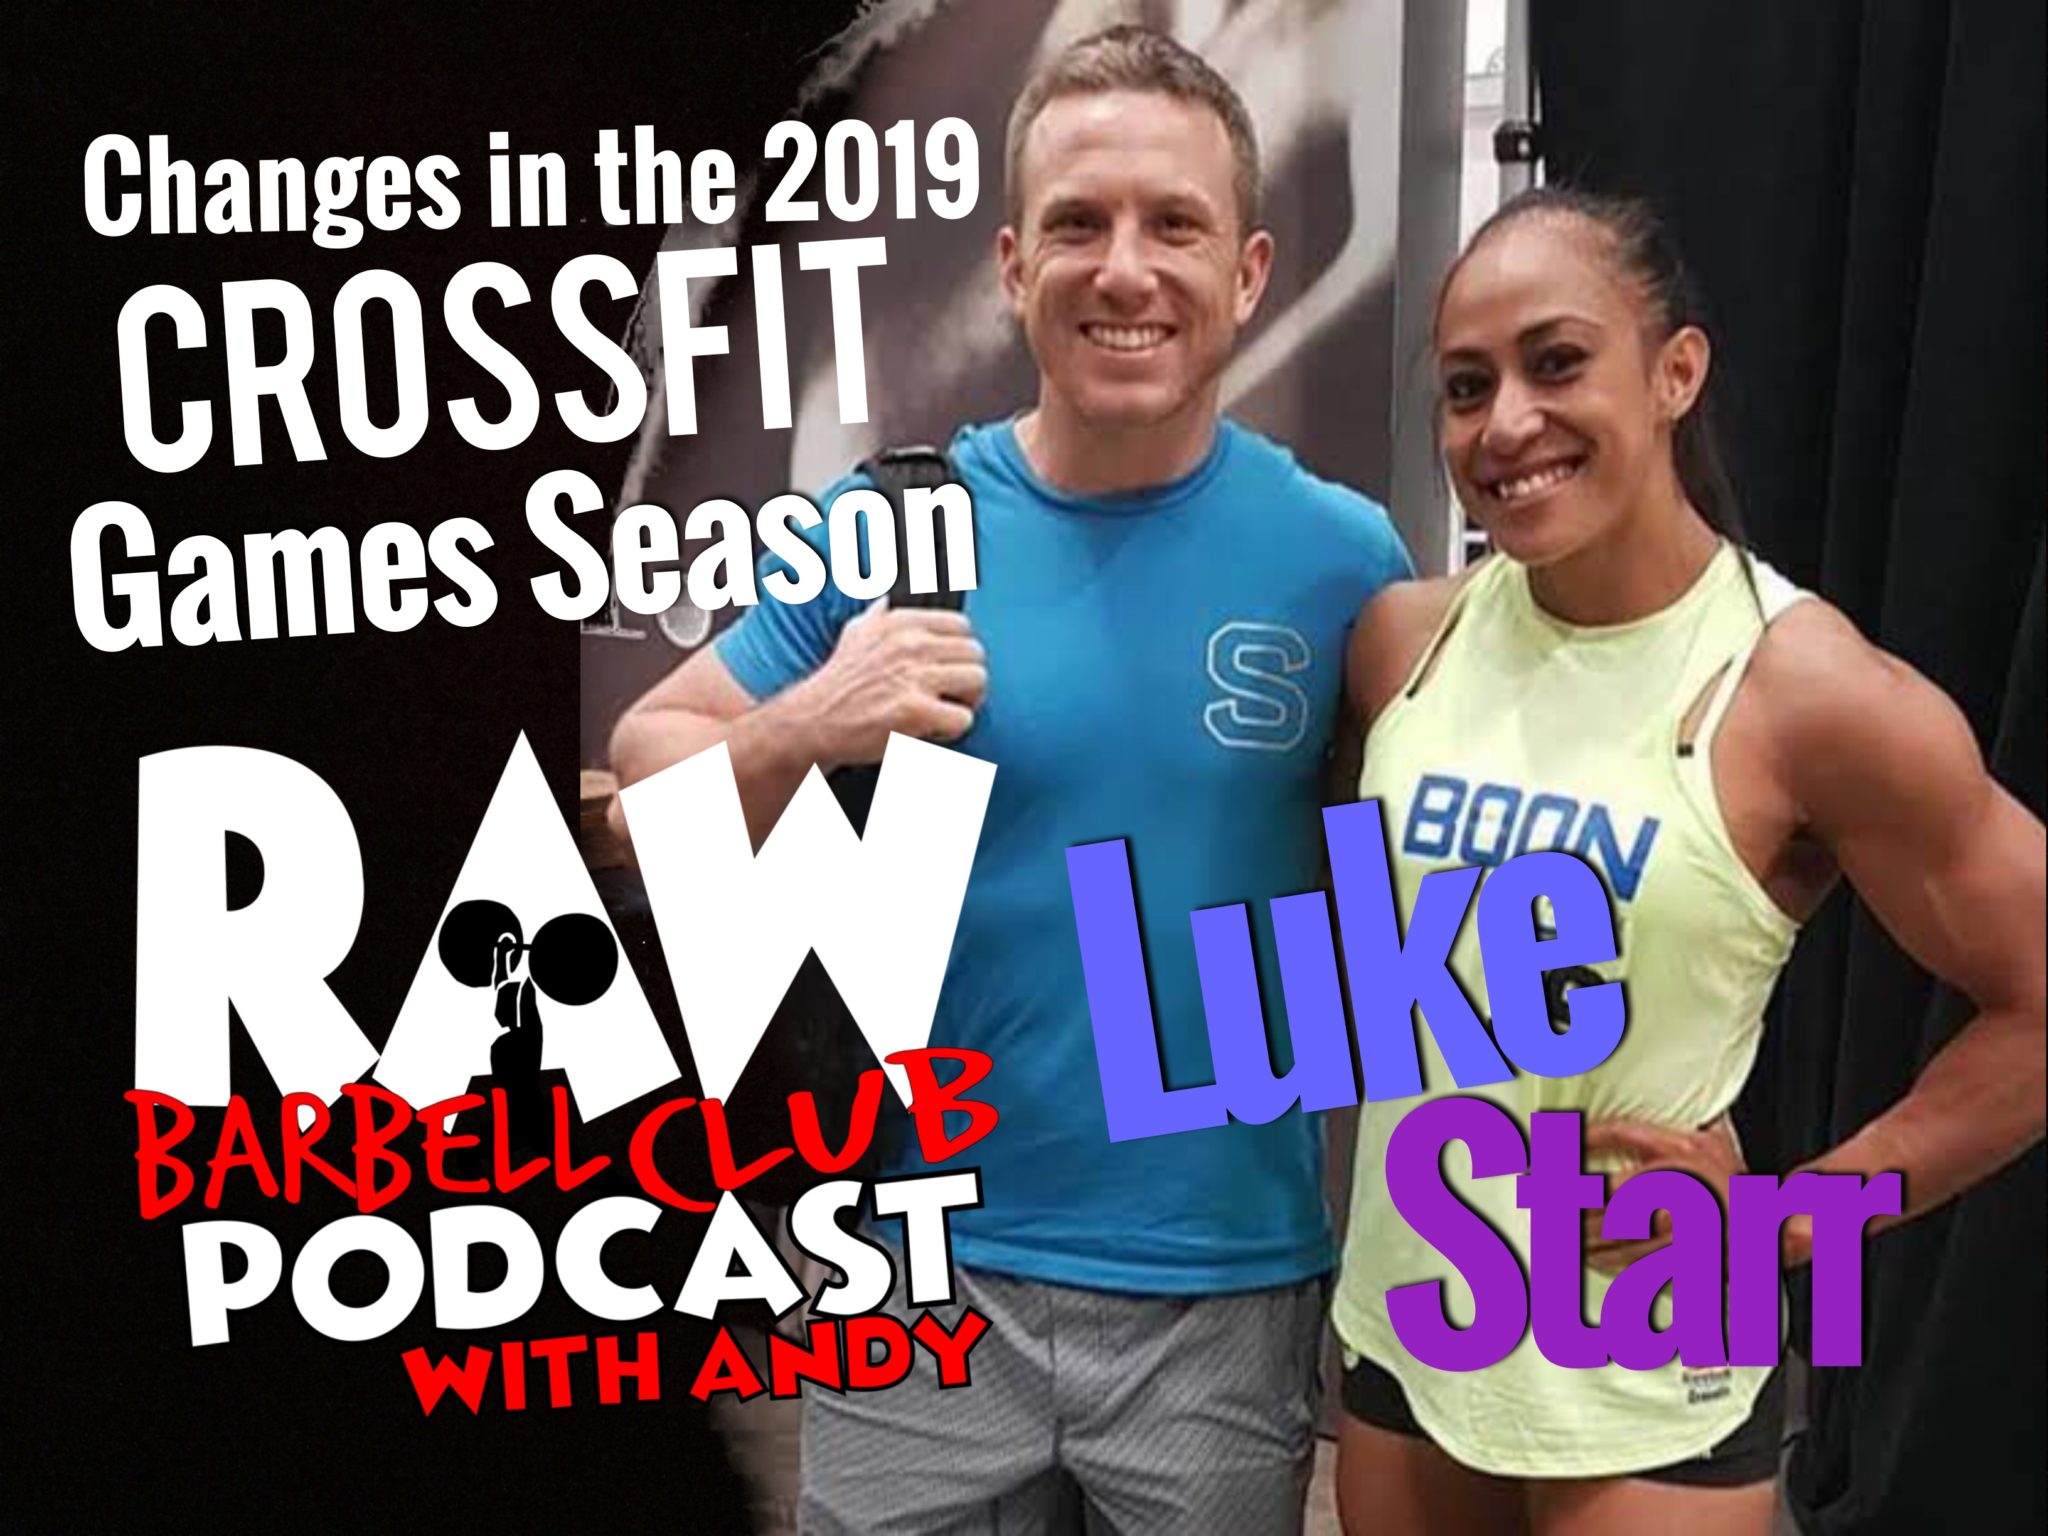 Luke Starr - Strength & Performance, CrossFit Games Season